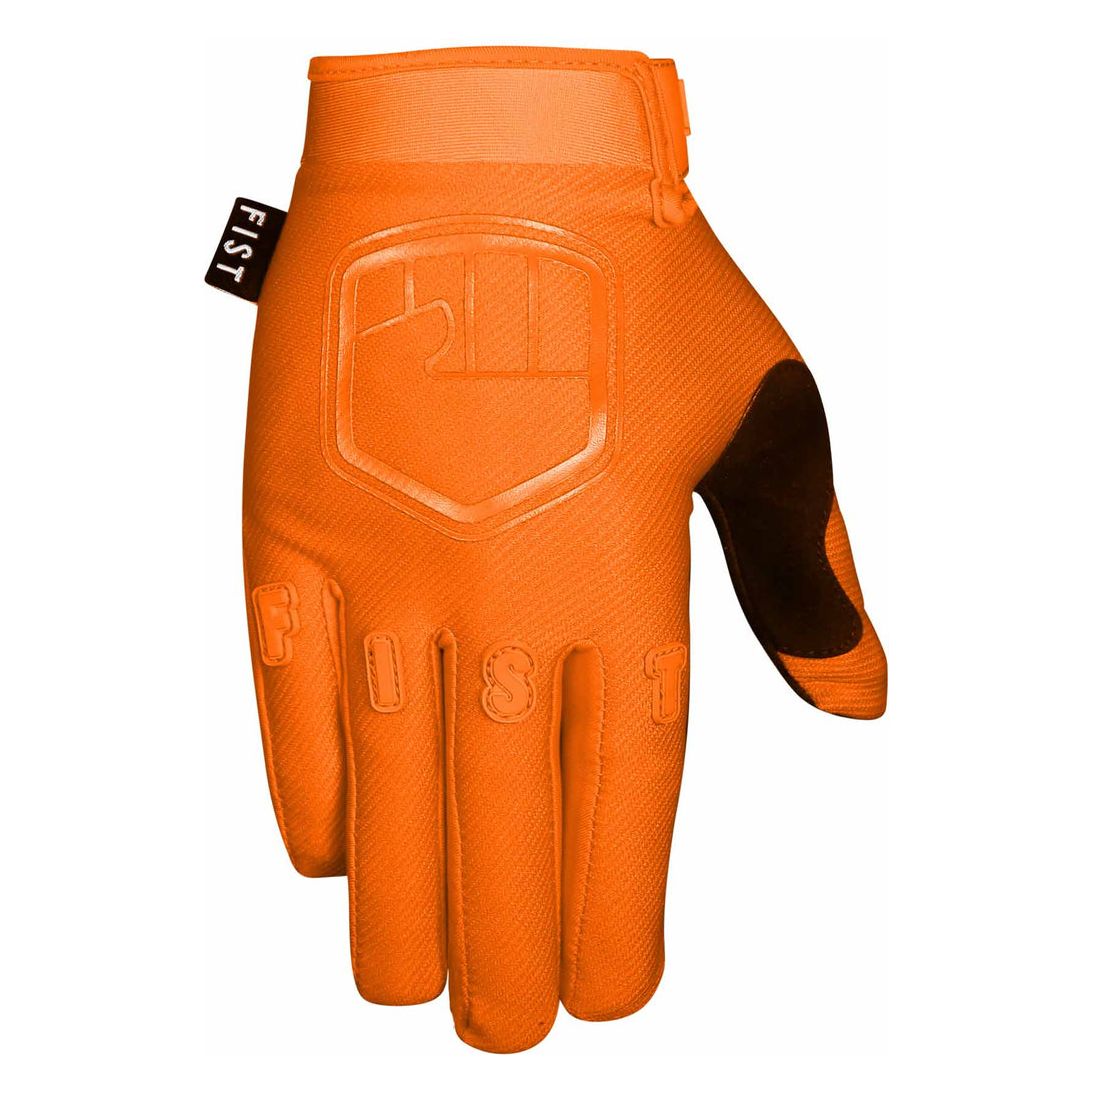 Fist Handwear Stocker Youth Strapped Glove - Youth L - Orange Stocker - Image 1